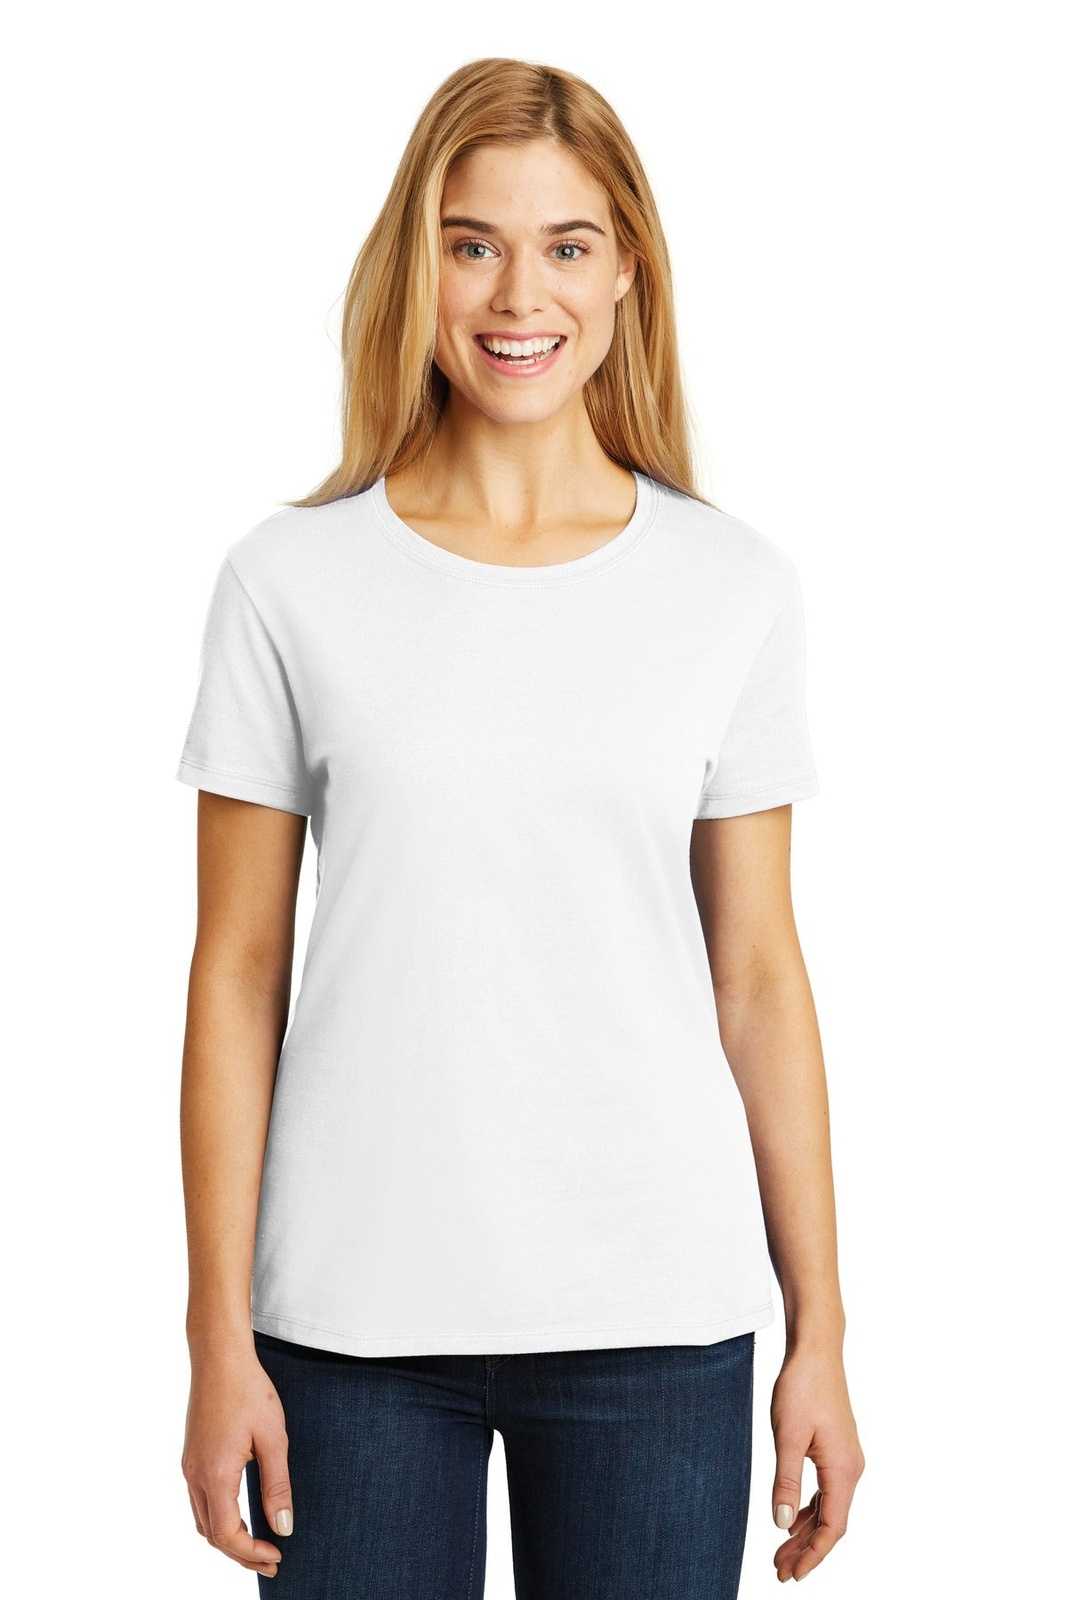 Hanes SL04 Ladies Nano-T Cotton T-Shirt - White - HIT a Double